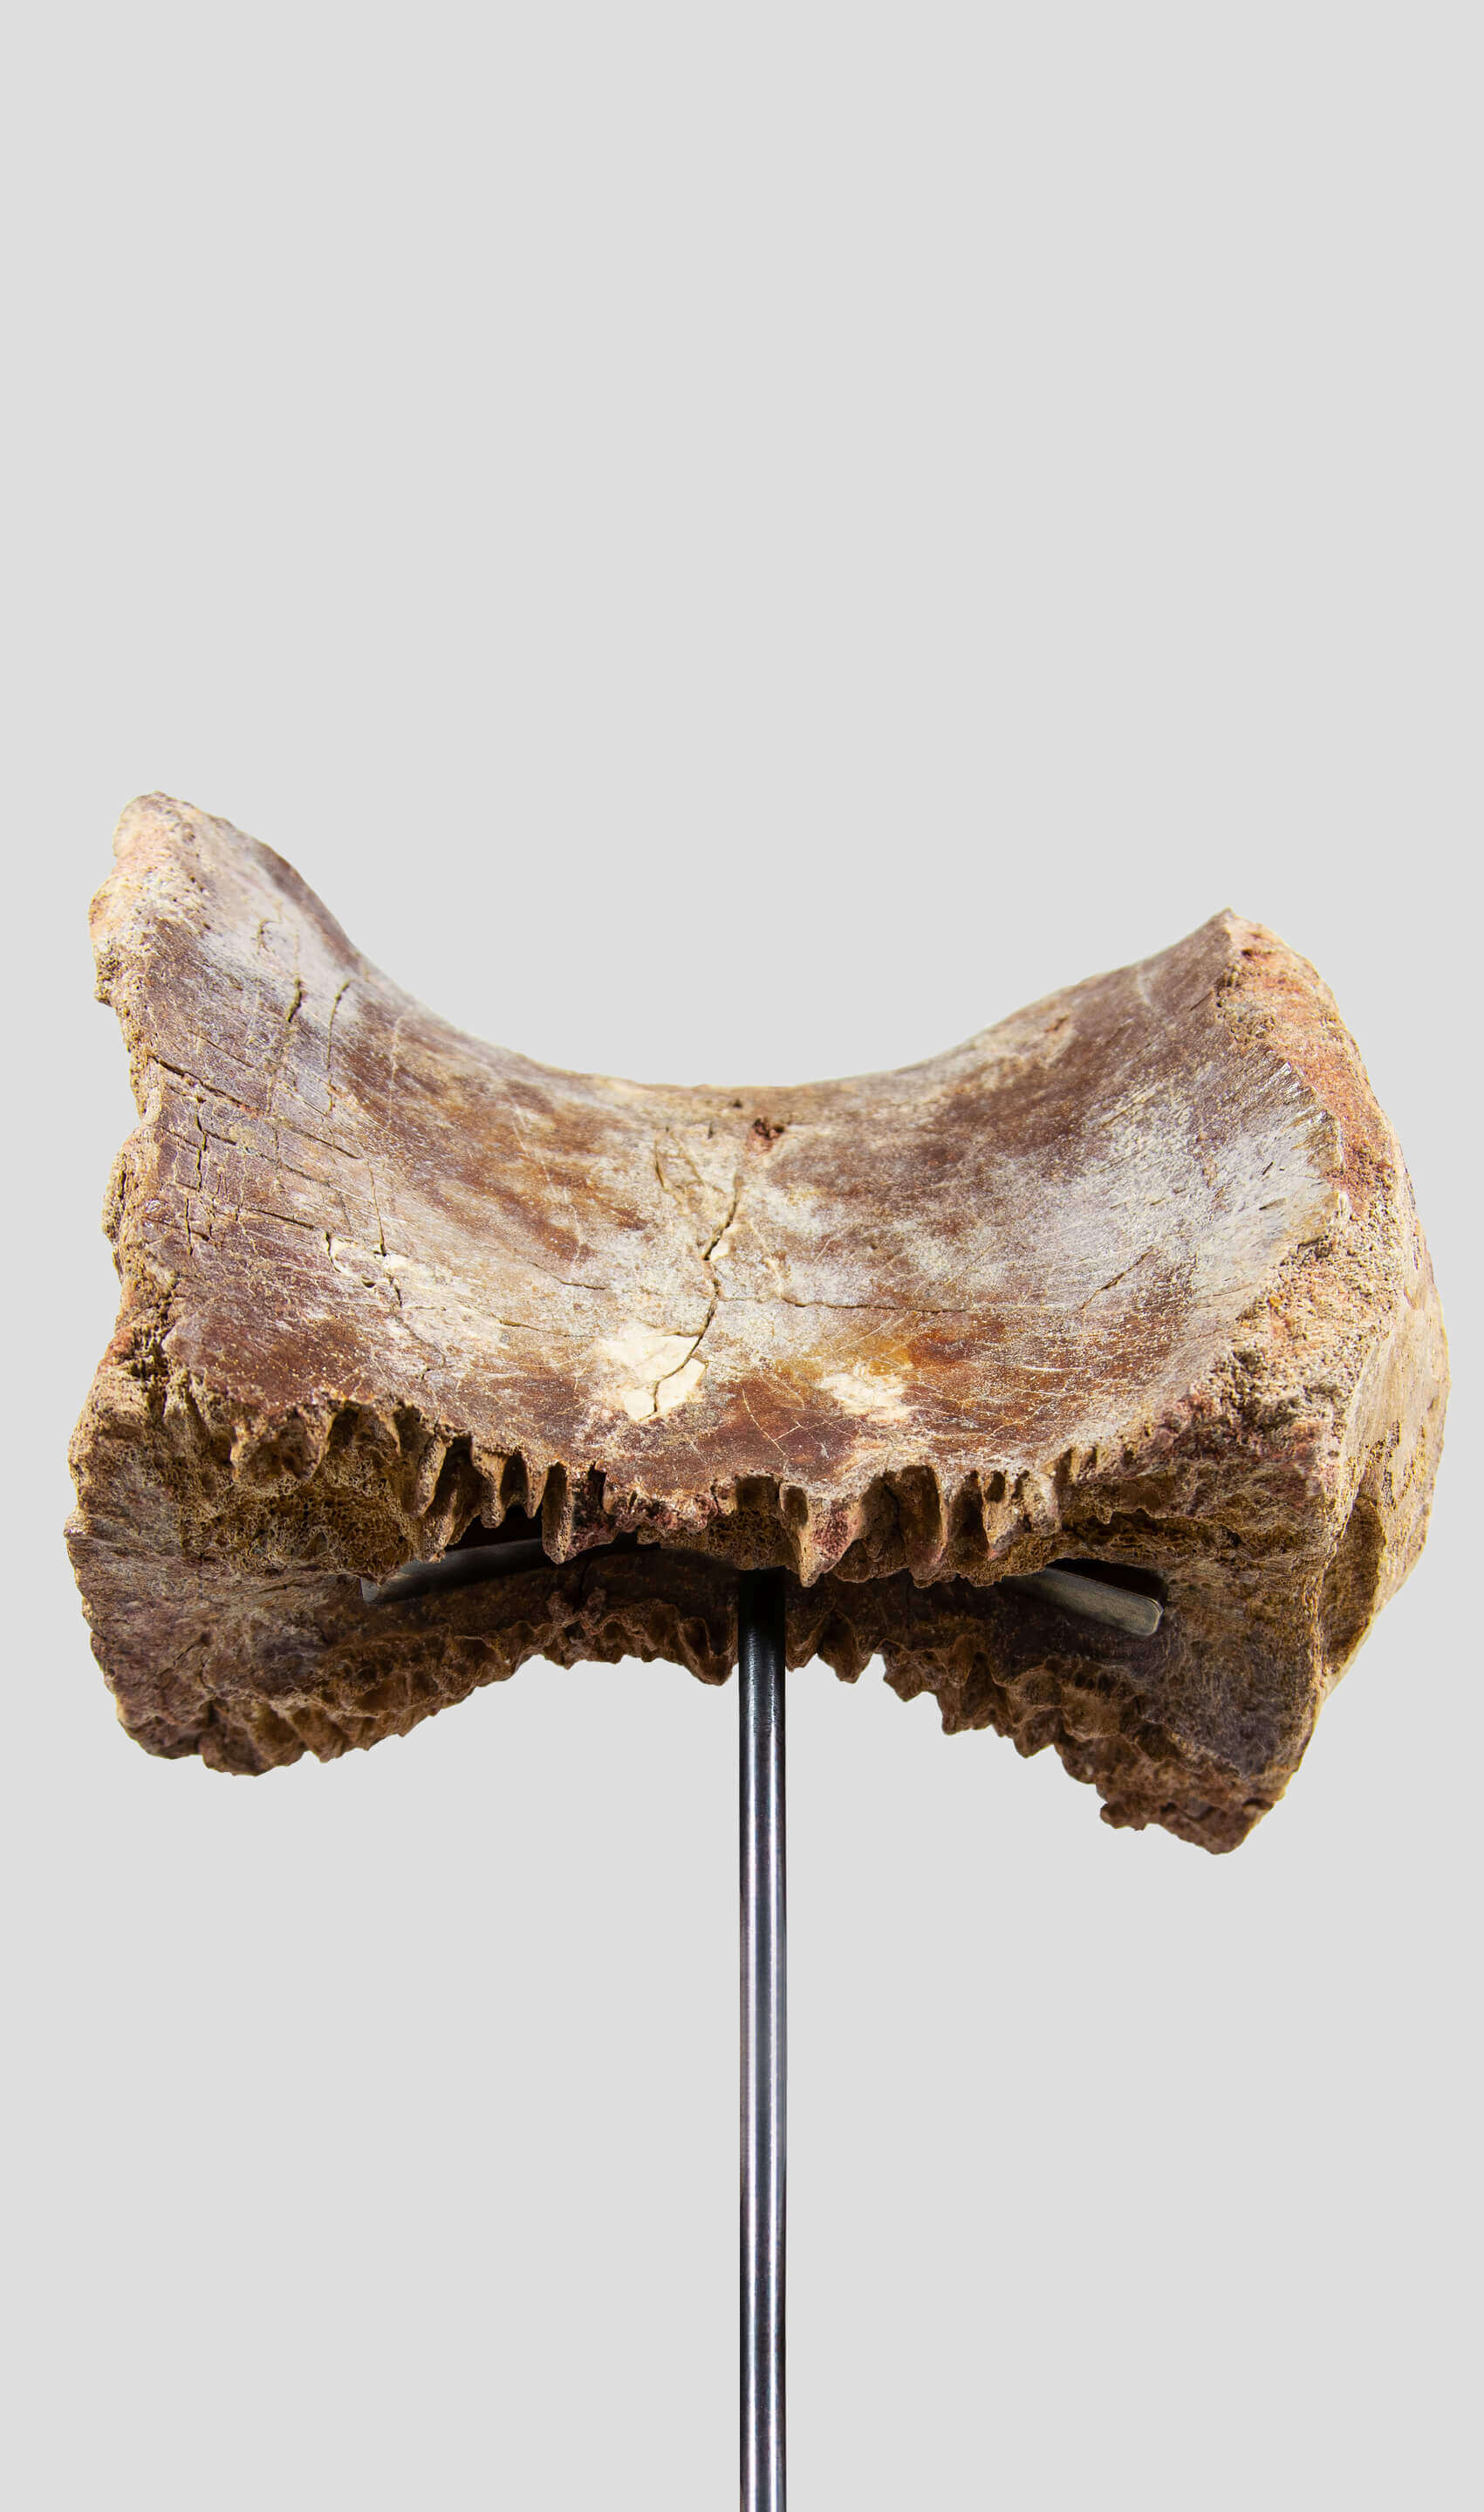 A rare dinosaur vertebra for sale on bronze stand 44